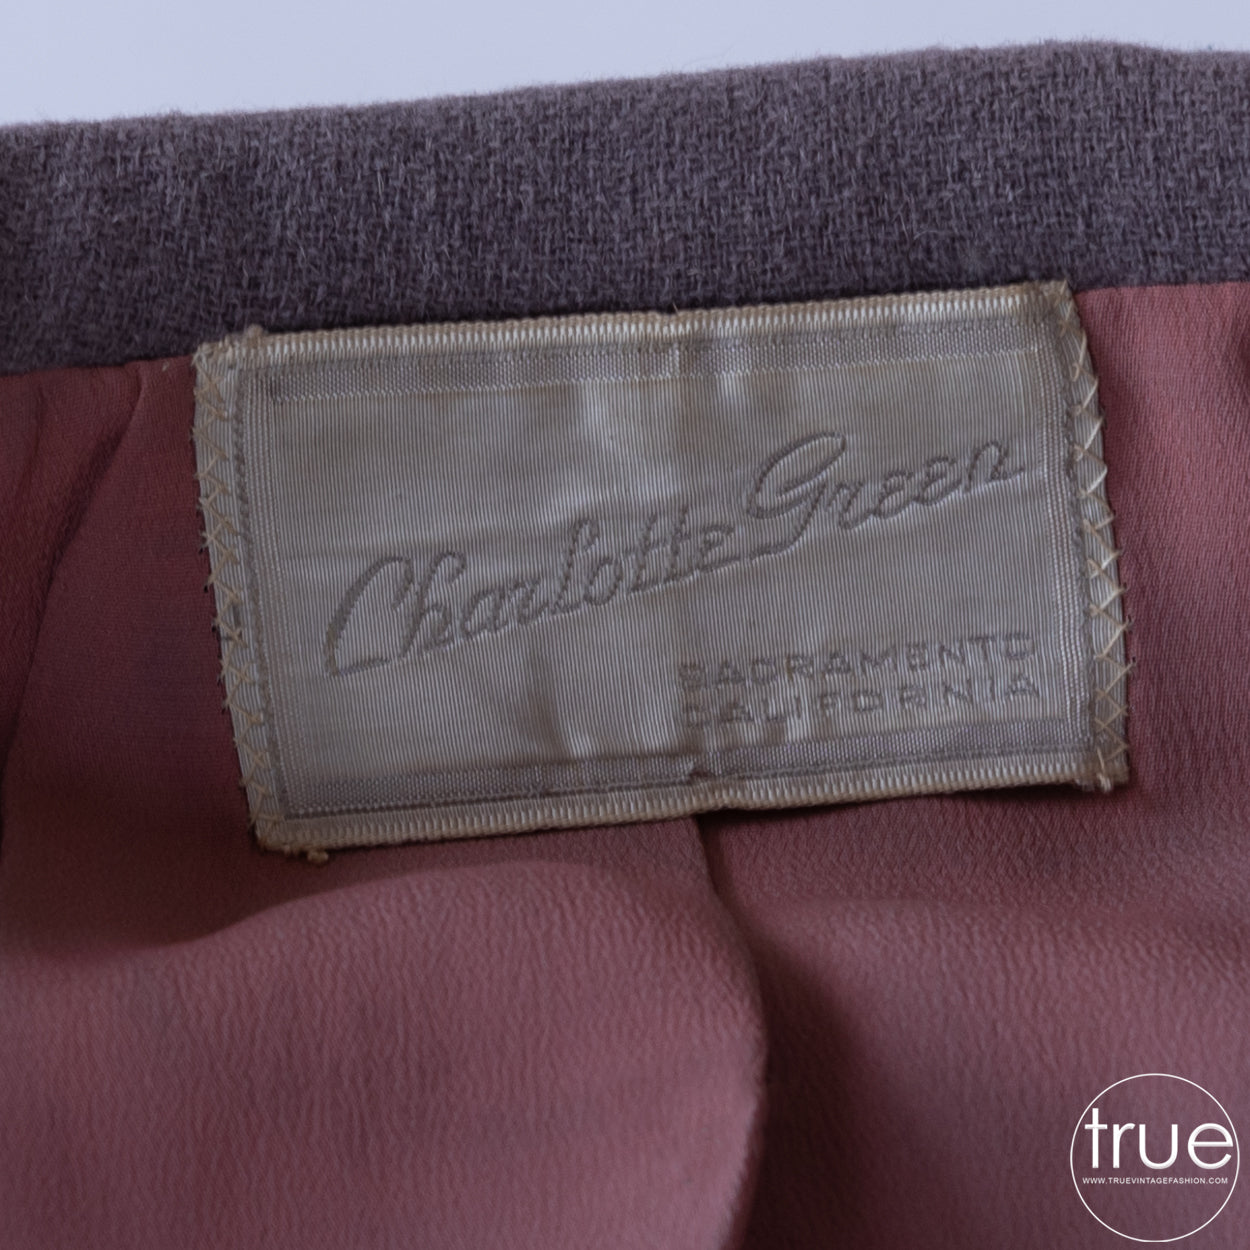 vintage 1940's jacket ...classic "new look" Charlotte Green lavender jacket blazer